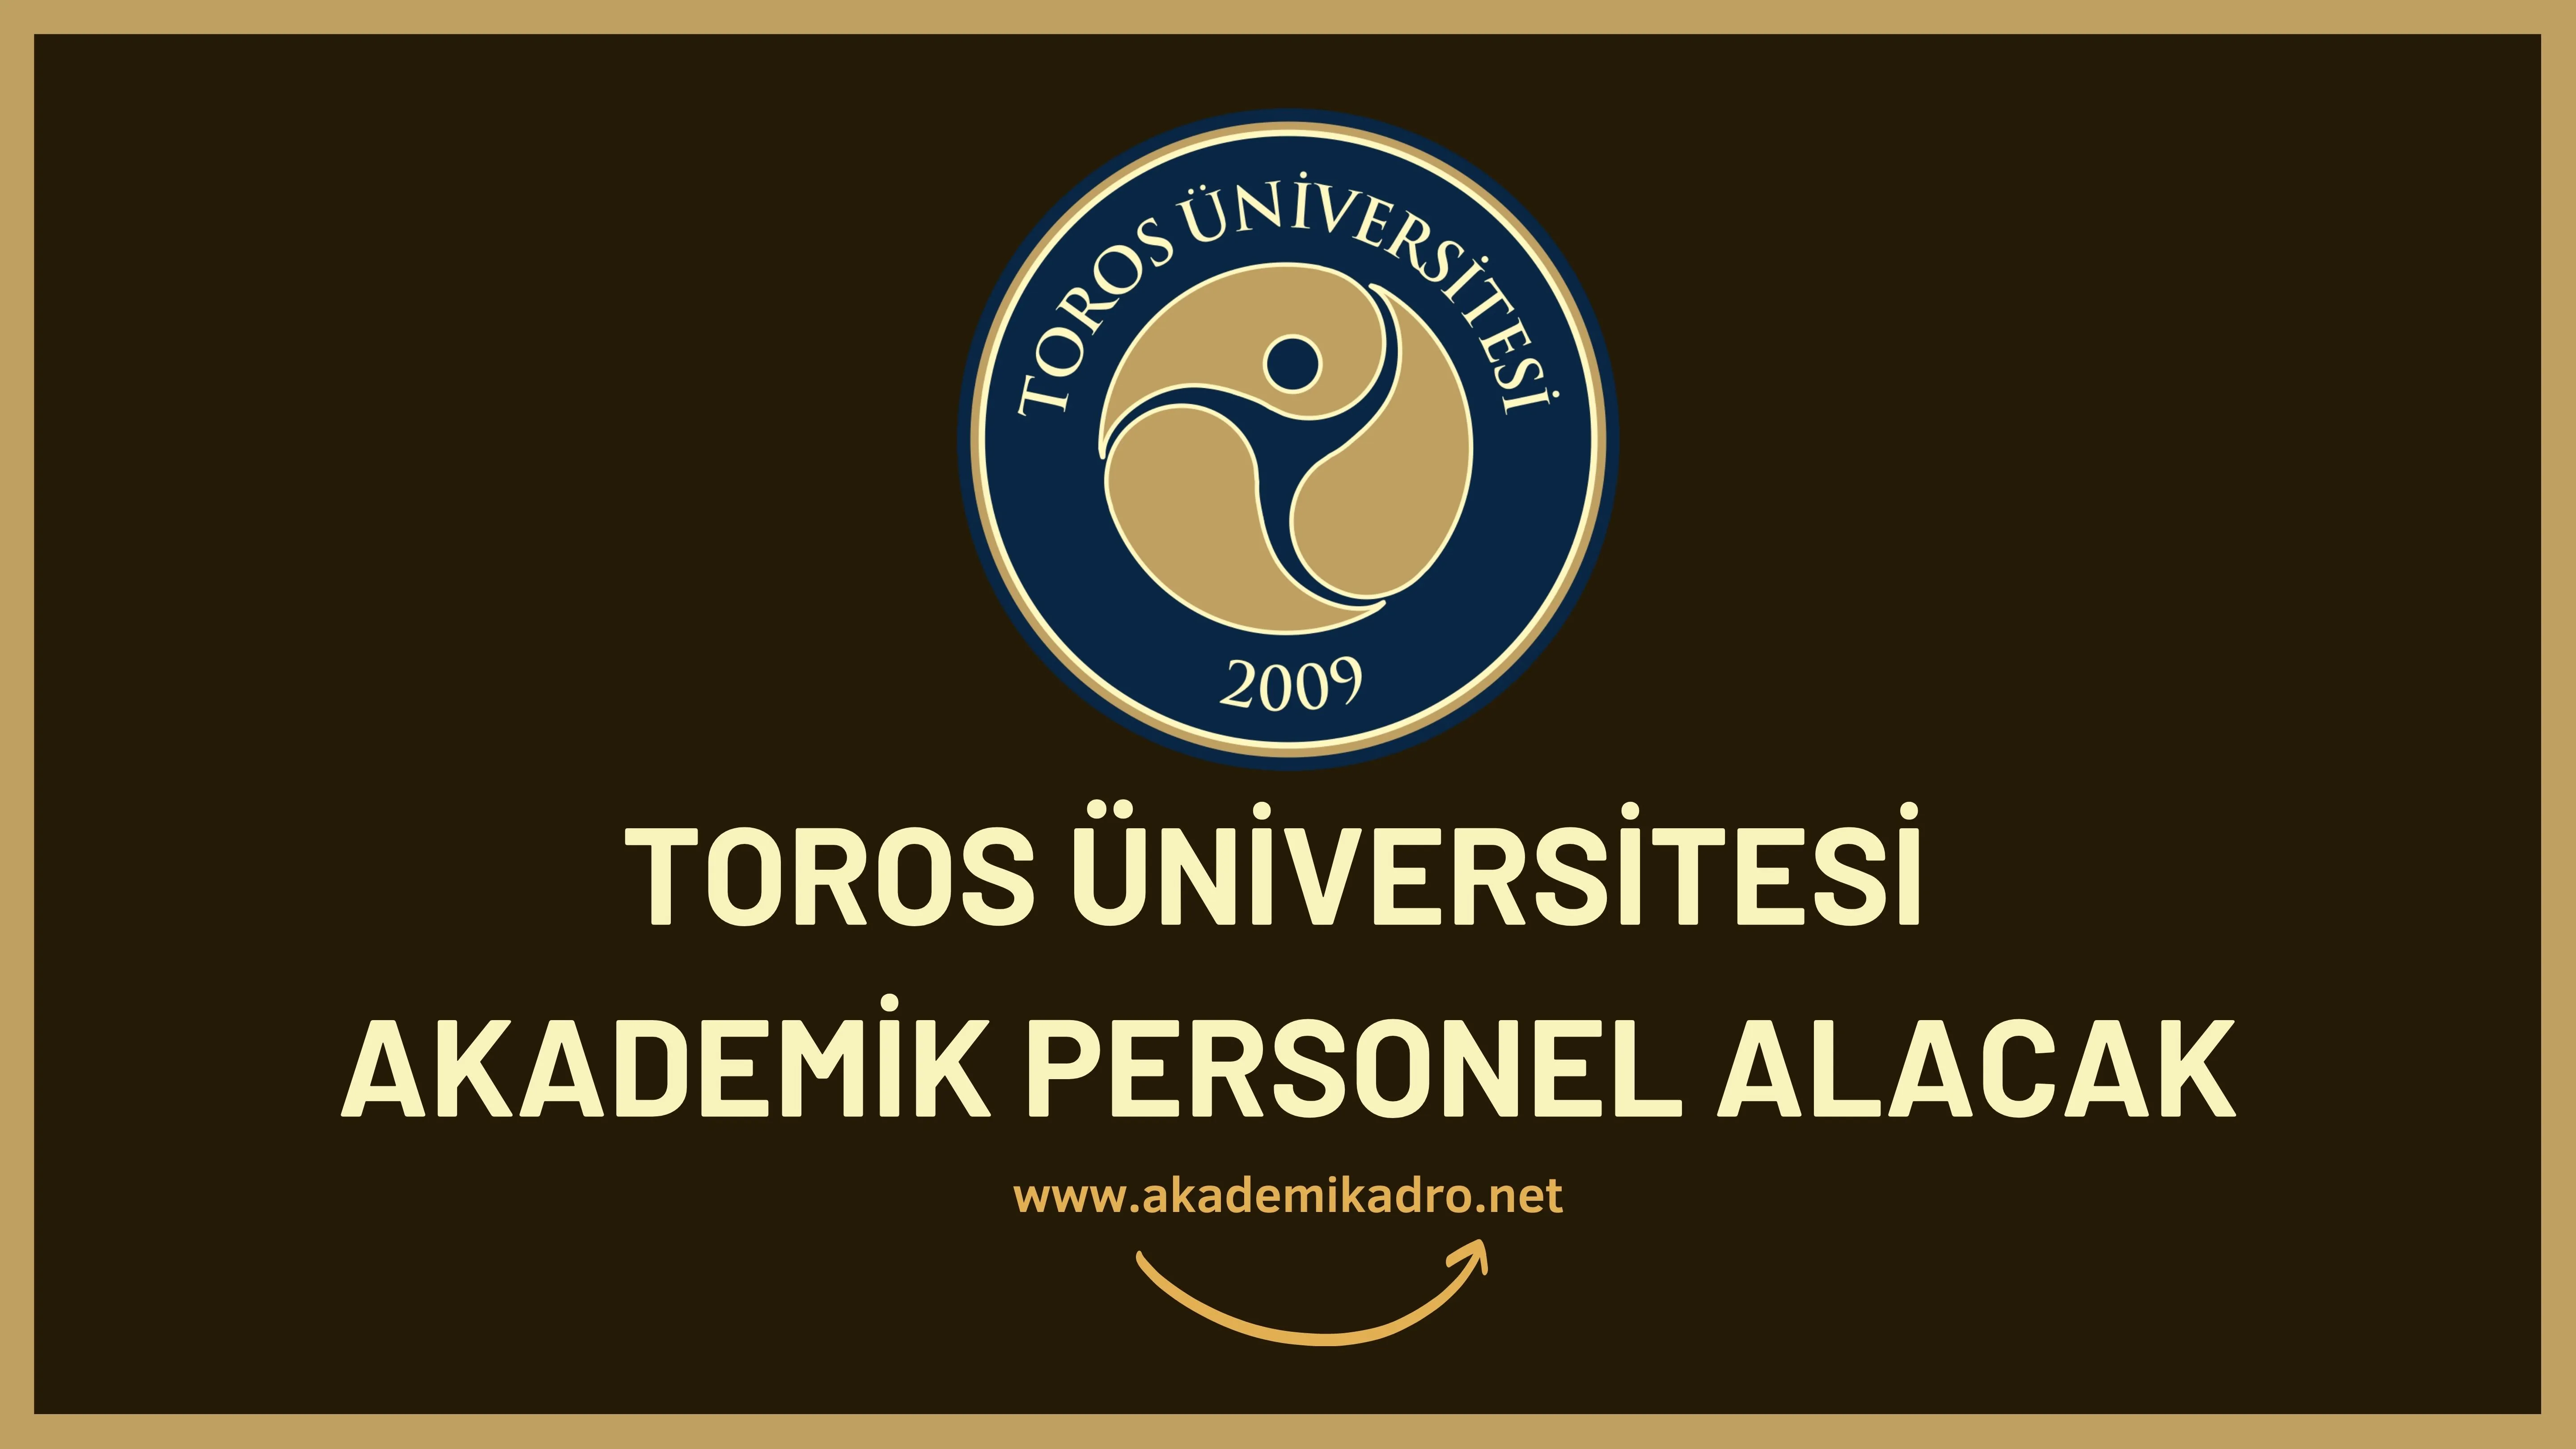 Toros Üniversitesi 9 akademik personel alacak.